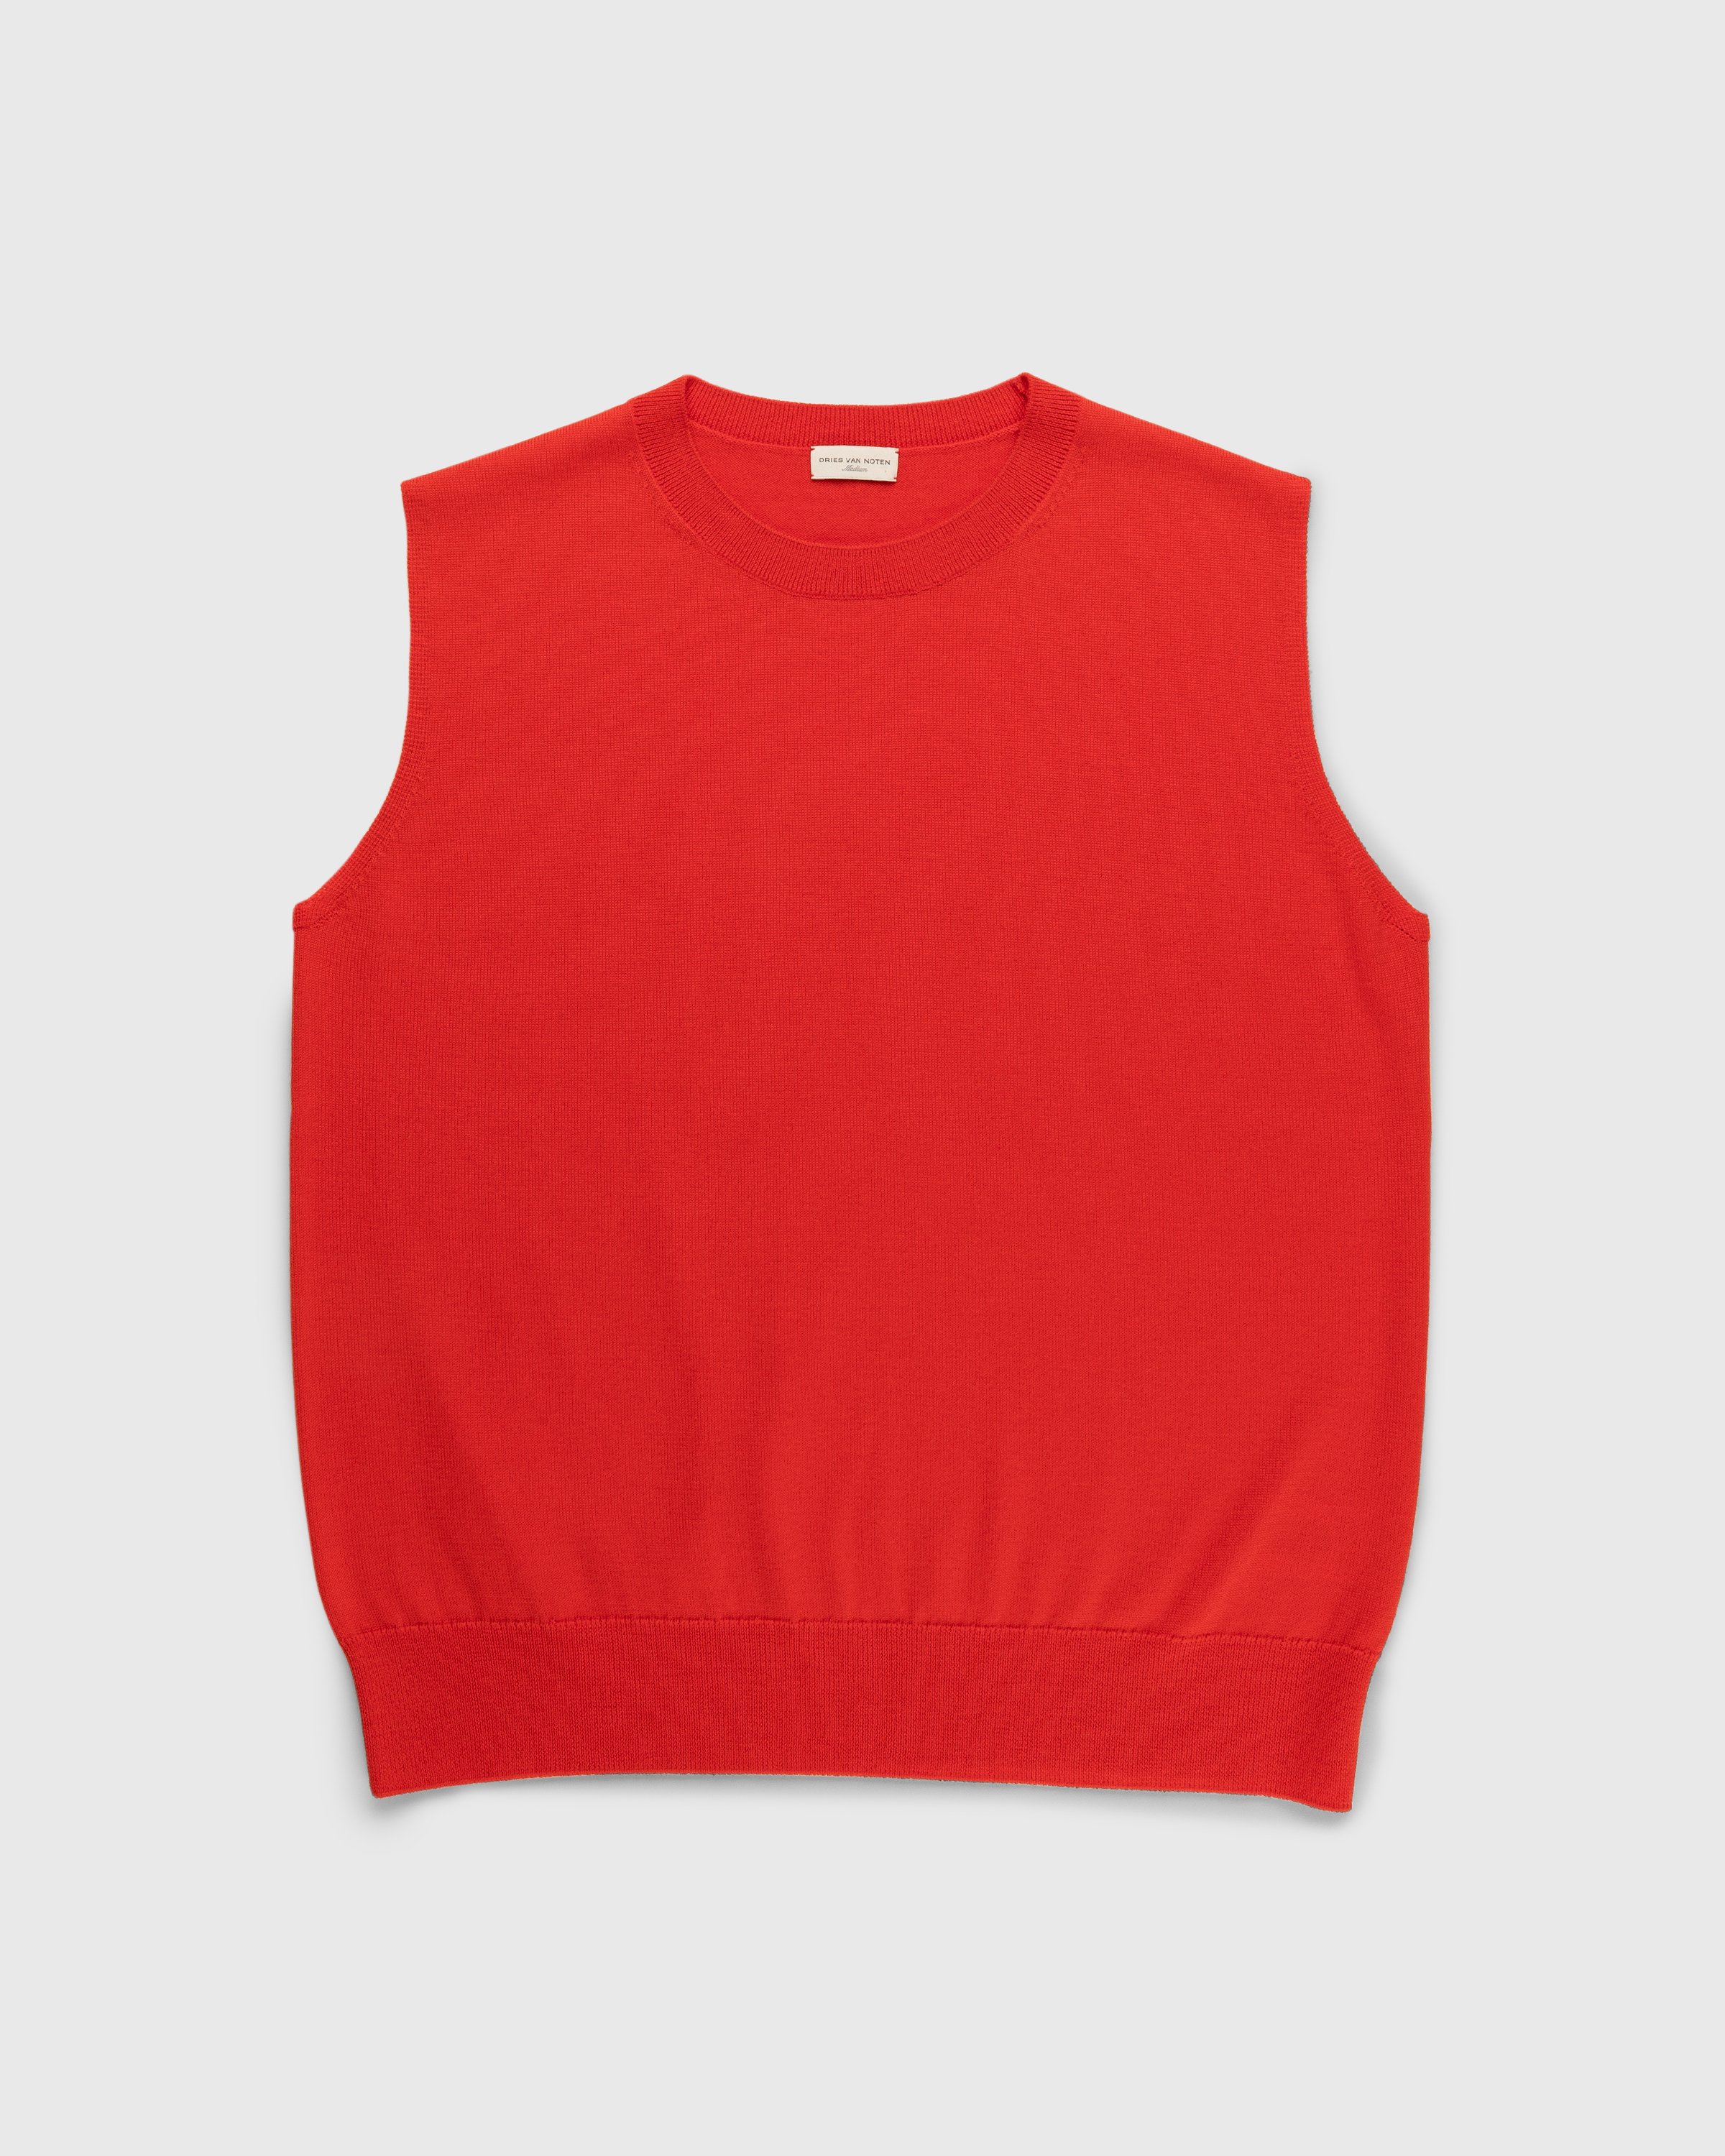 Dries van Noten - Neptune Sweater Vest Red - Clothing - Red - Image 1